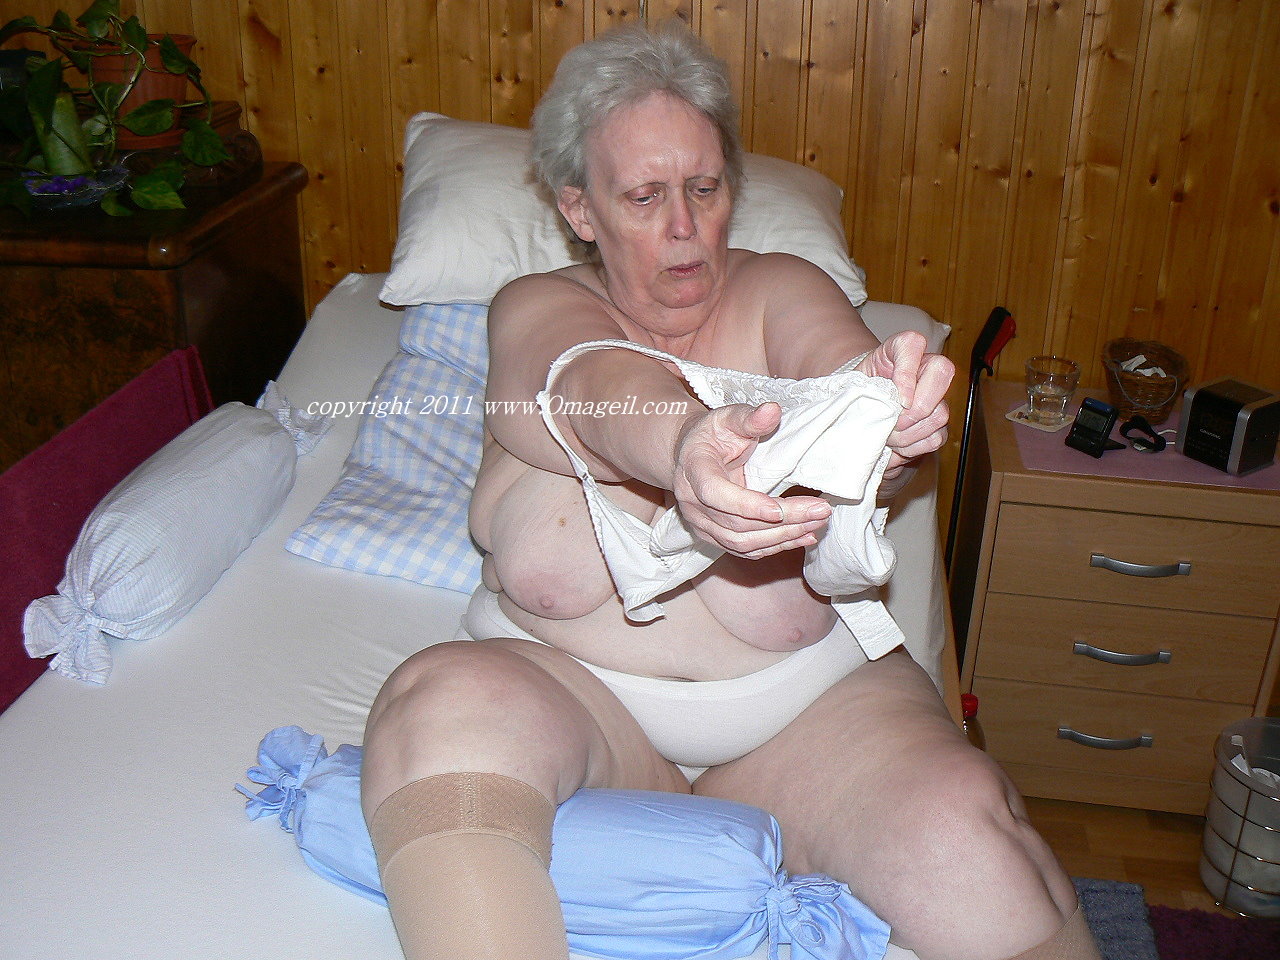 OmaGeiL Senior Pervert Horny Photos Collection.